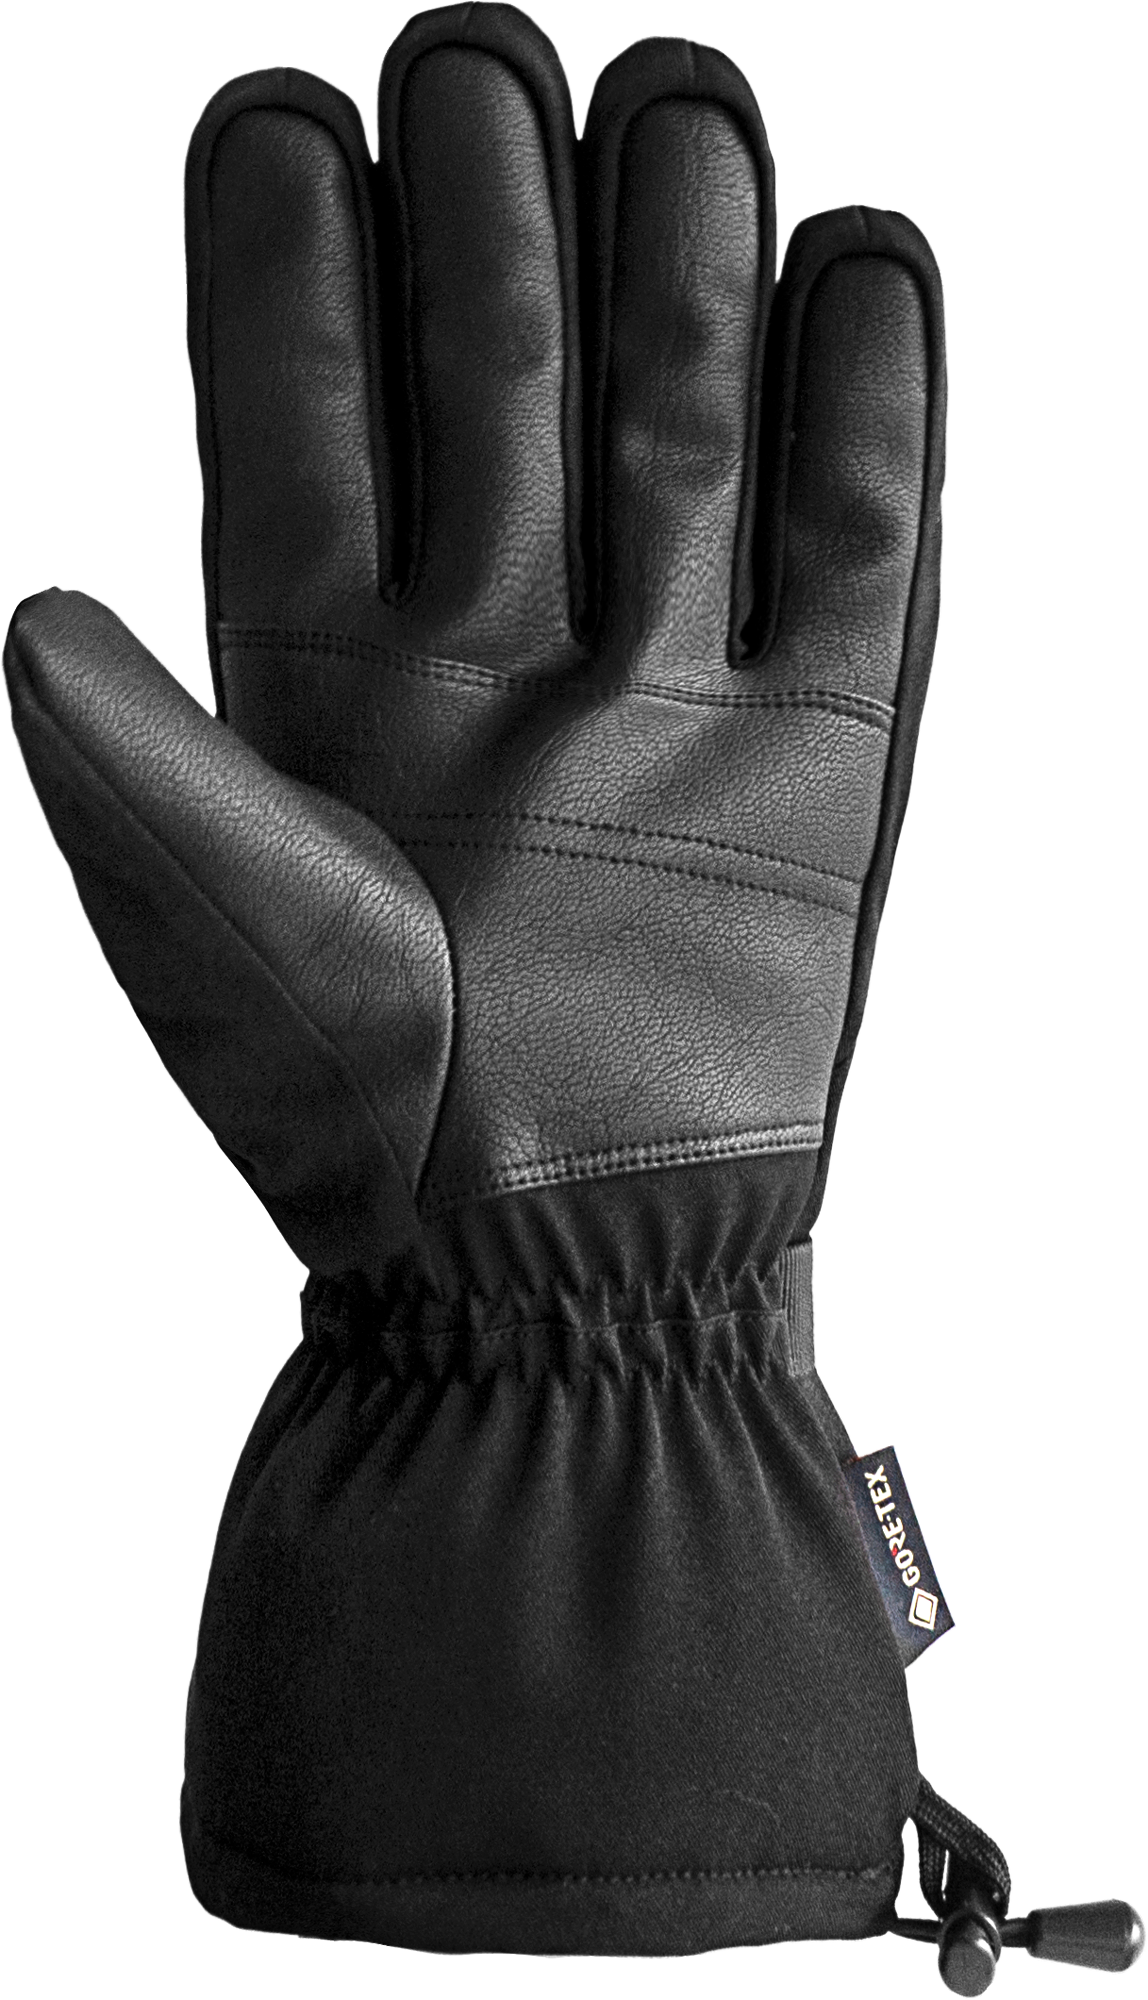 Winter Glove Reusch Warm GORE-TEX